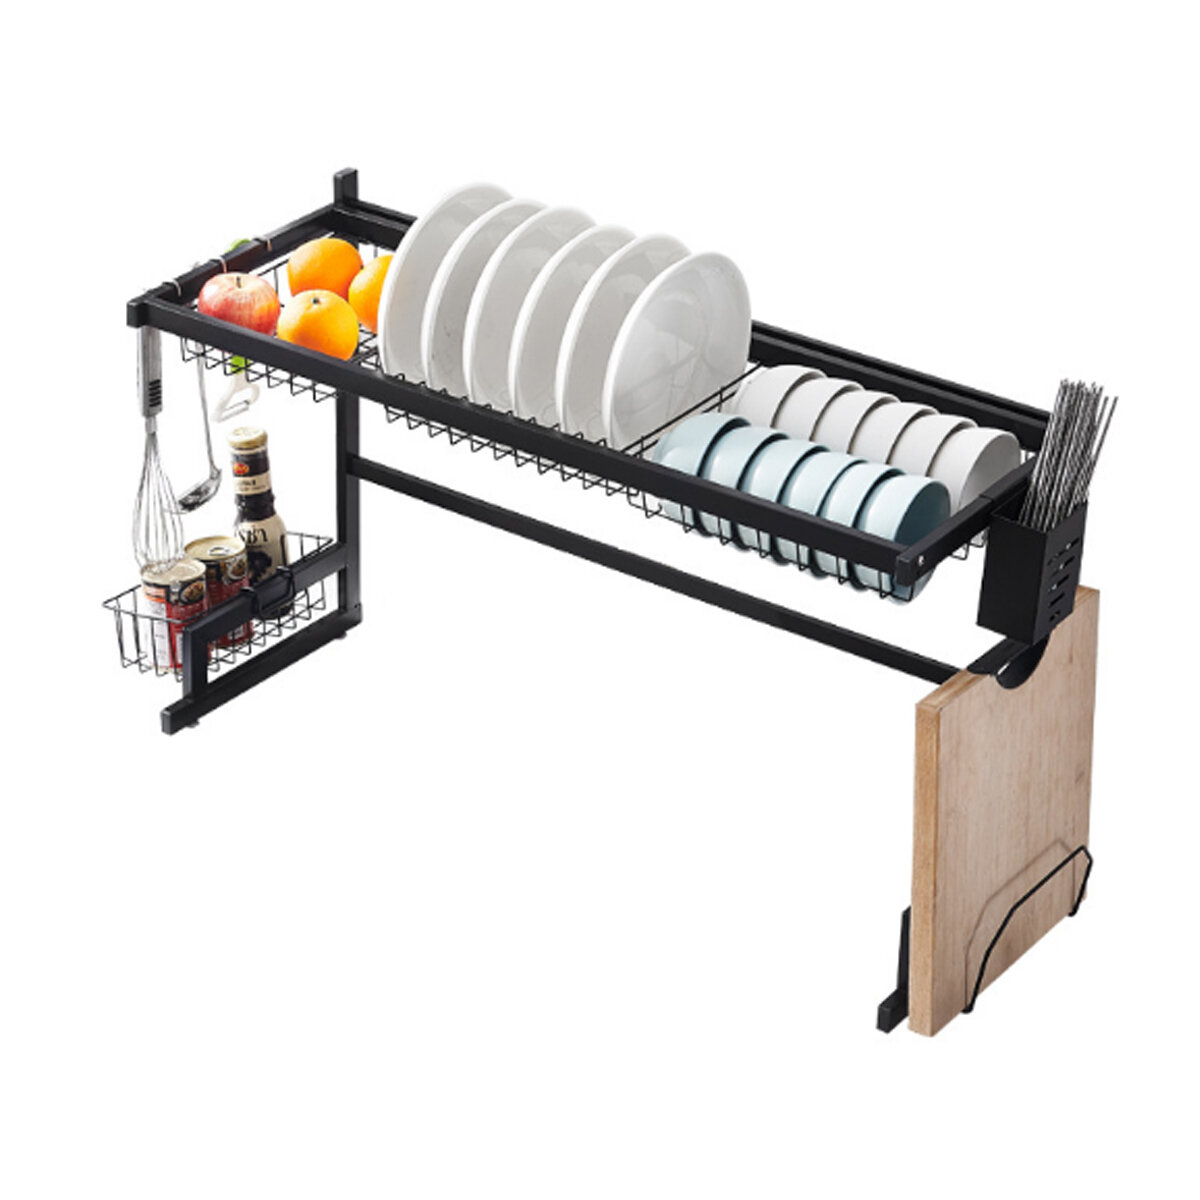 65/85cm dish drying rack organizer over sink kitchen draining storage holder drain rack Sale